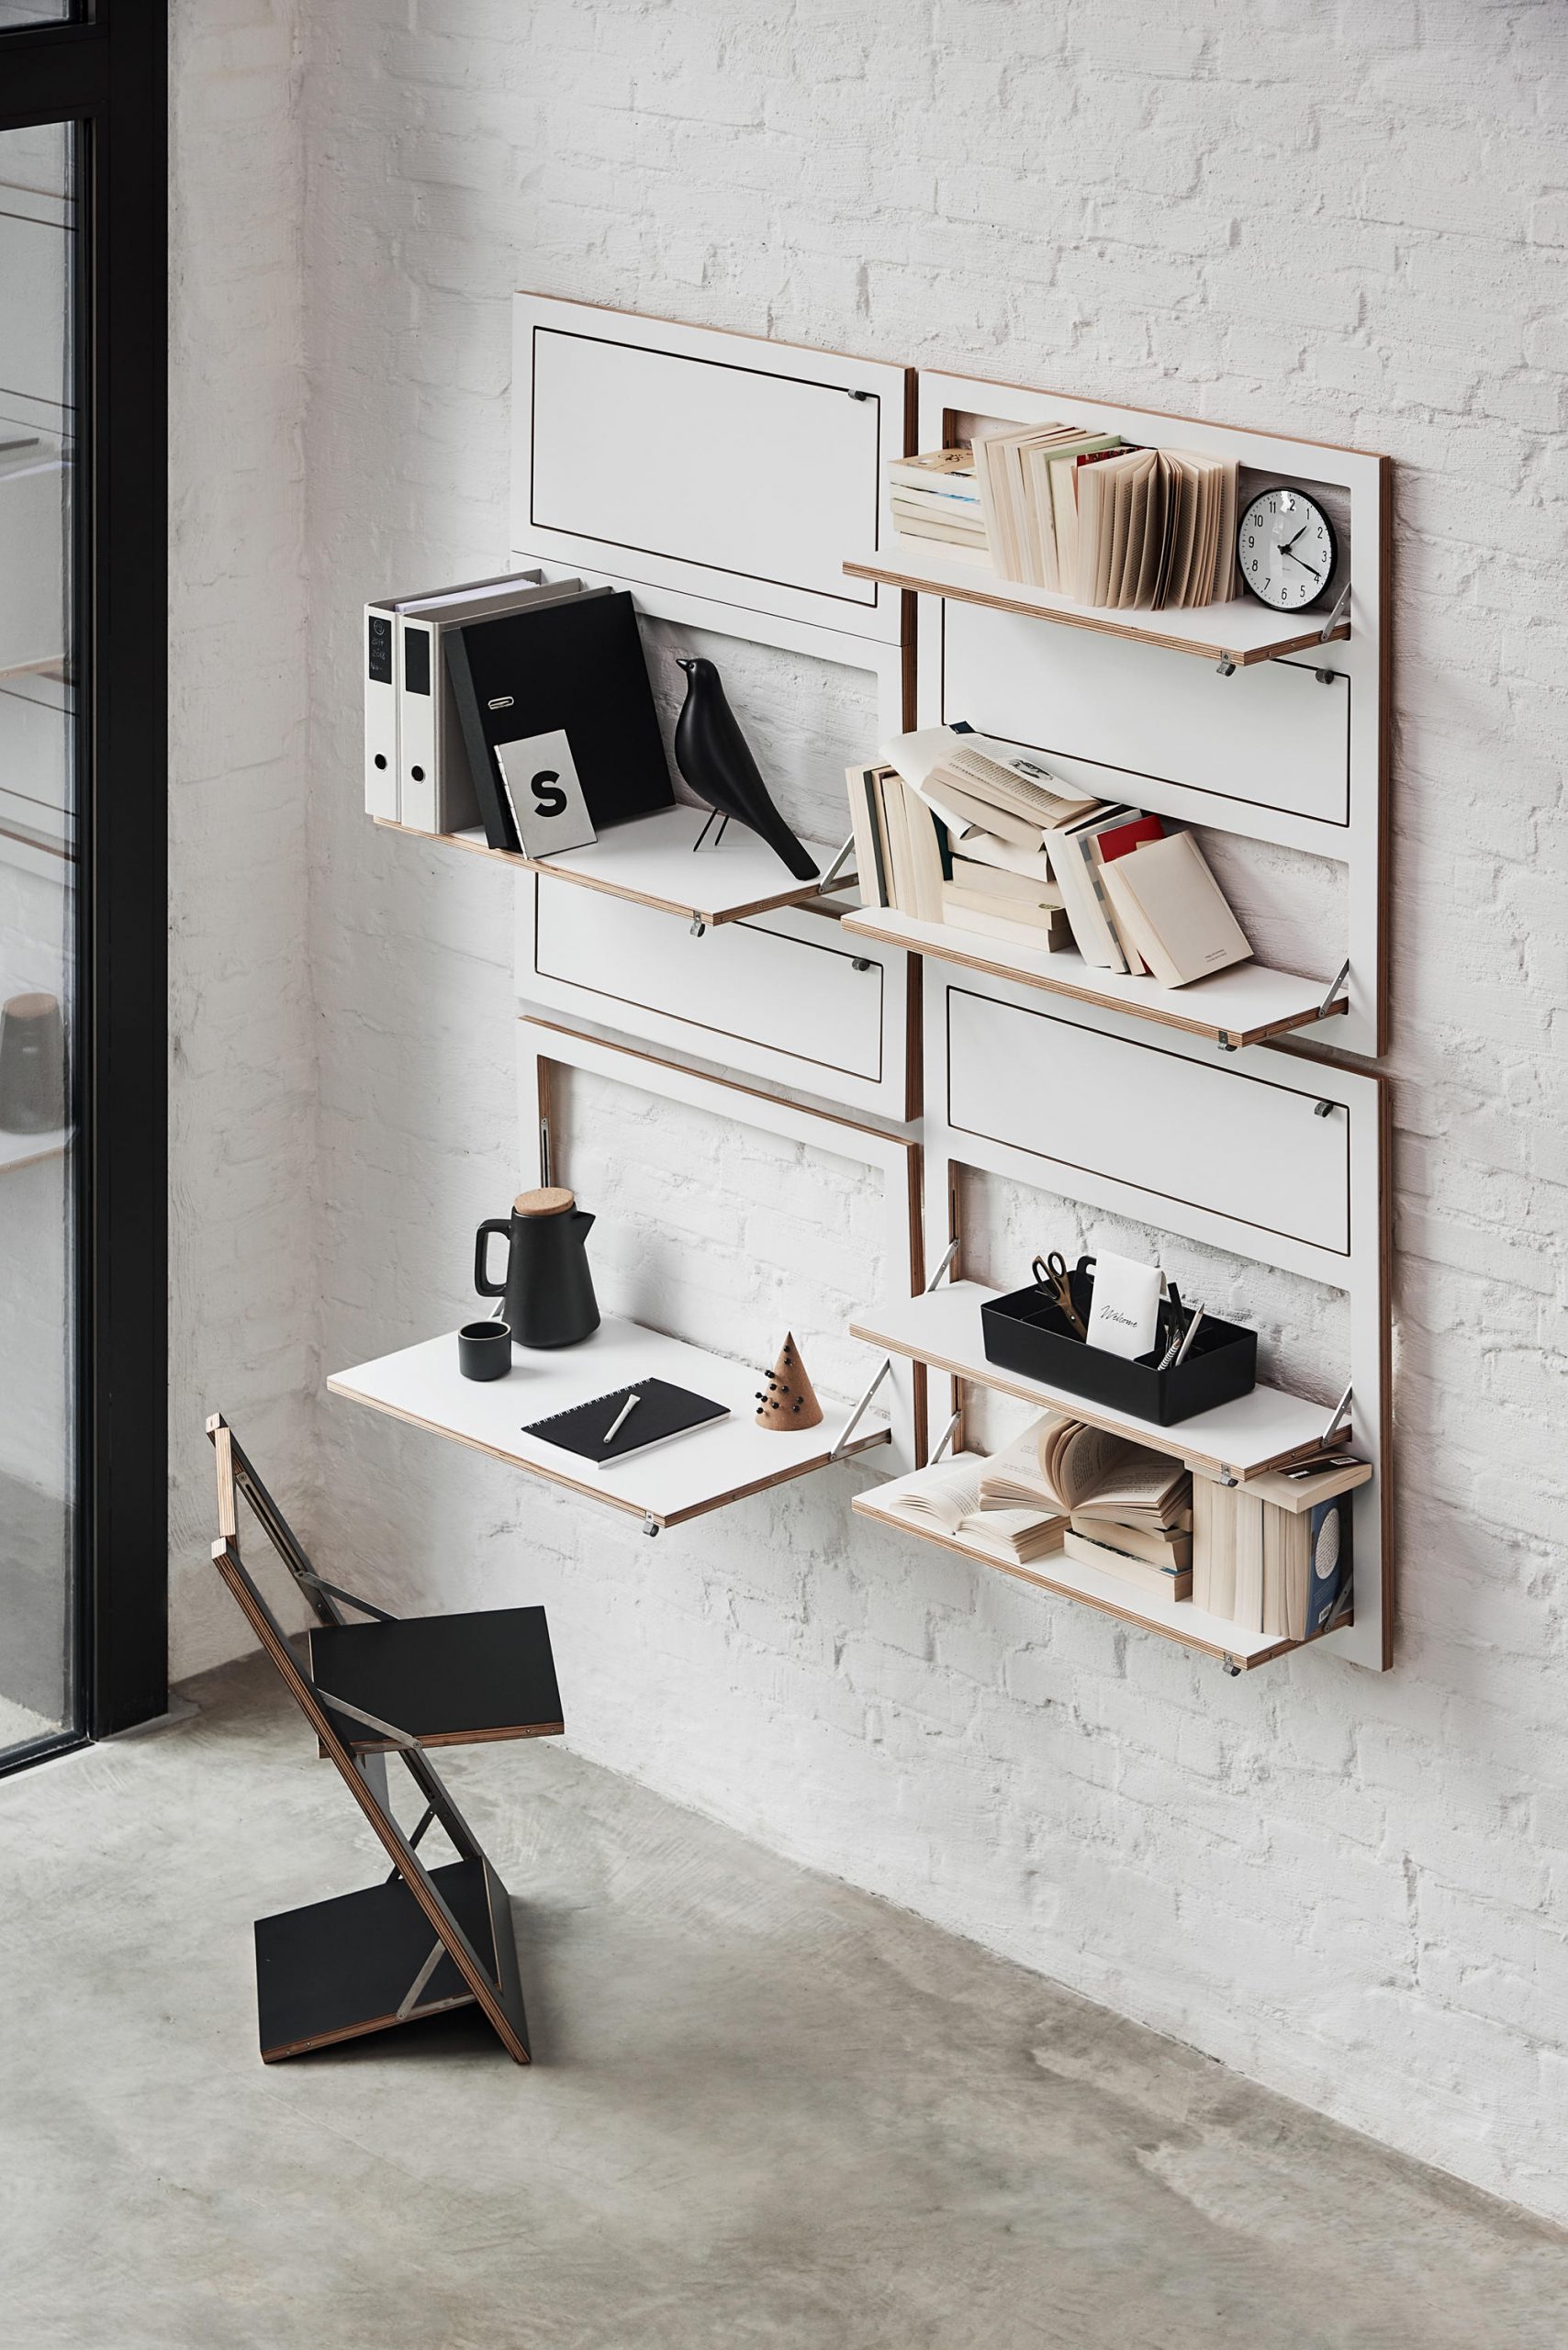 Fold away shelf that becomes a flexible desk when you need it